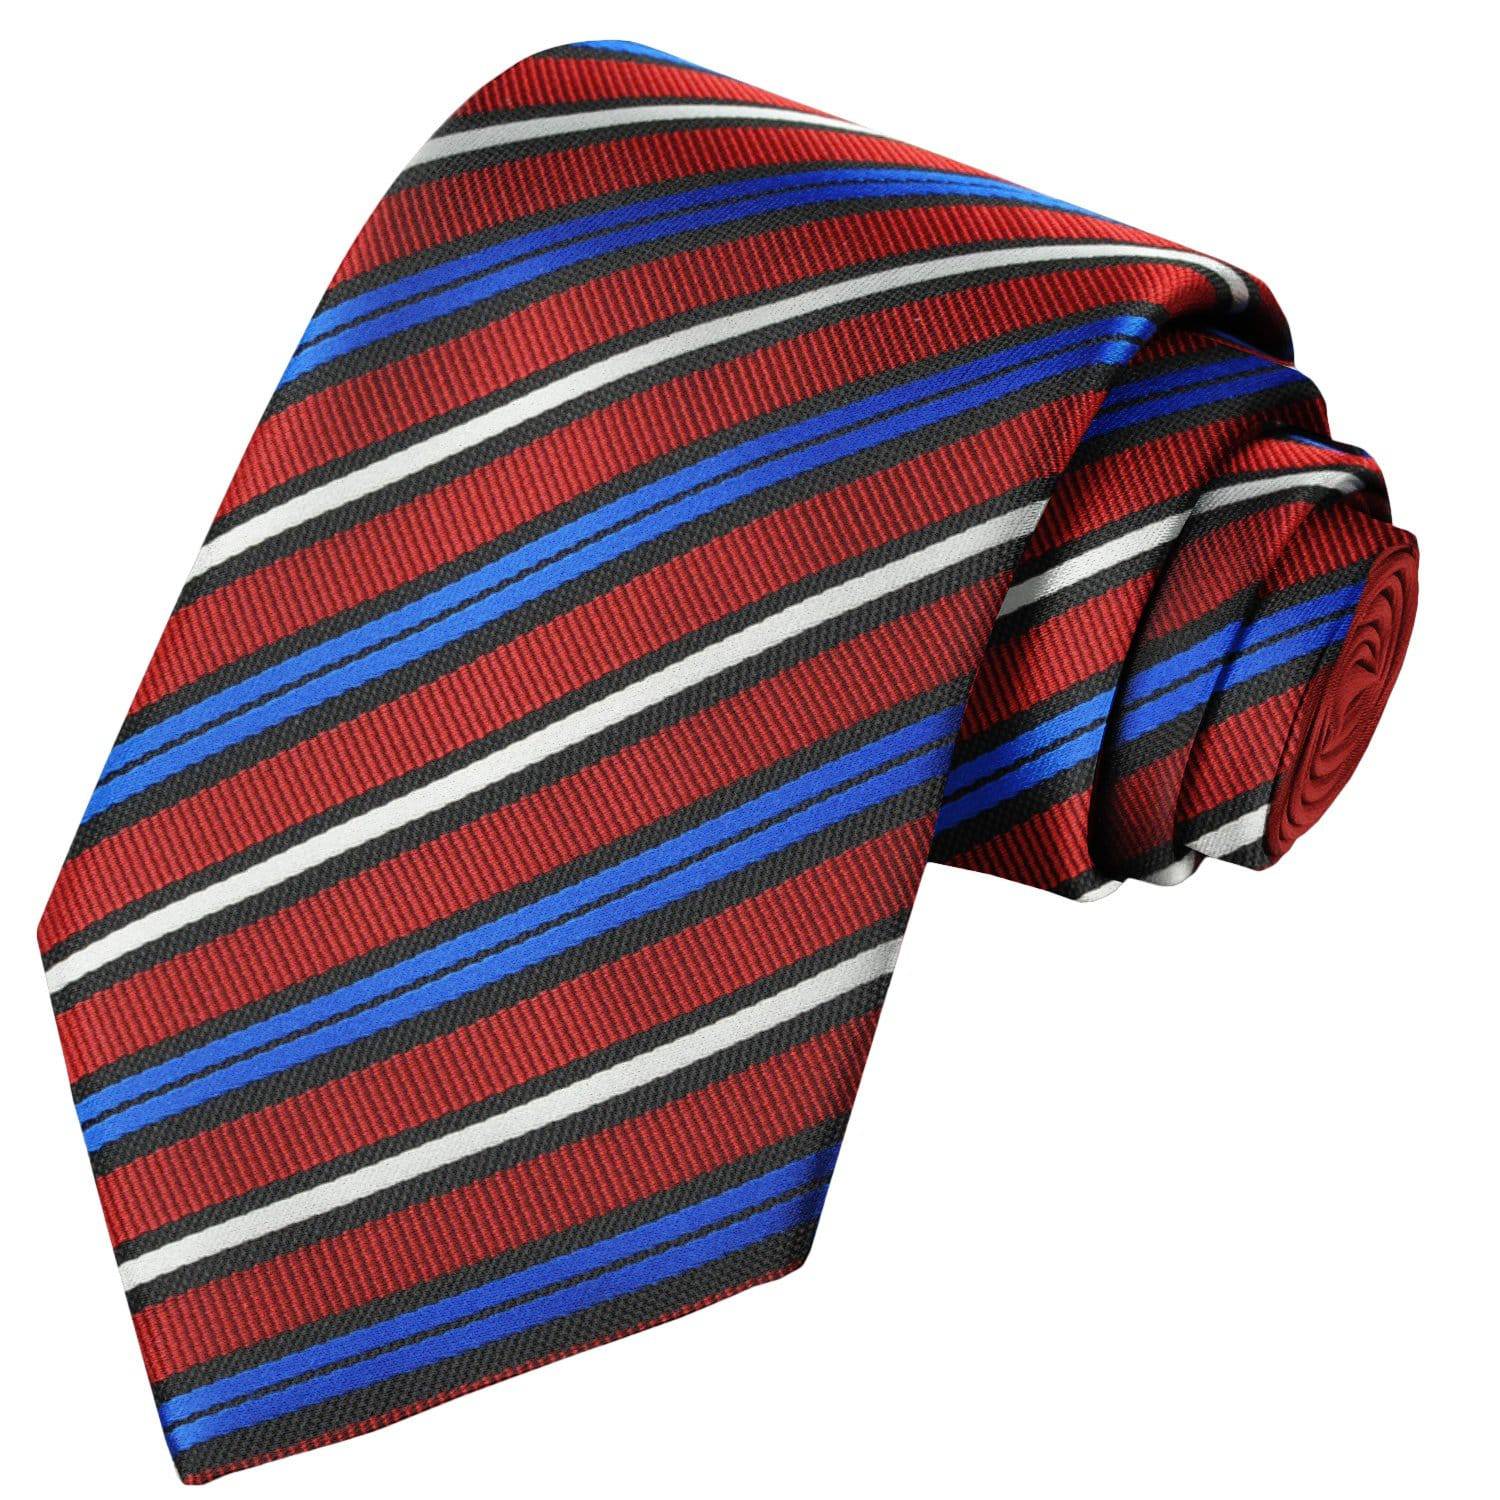 Sangria Red-White-Black-Blue Striped Tie - Tie, bowtie, pocket square  | Kissties